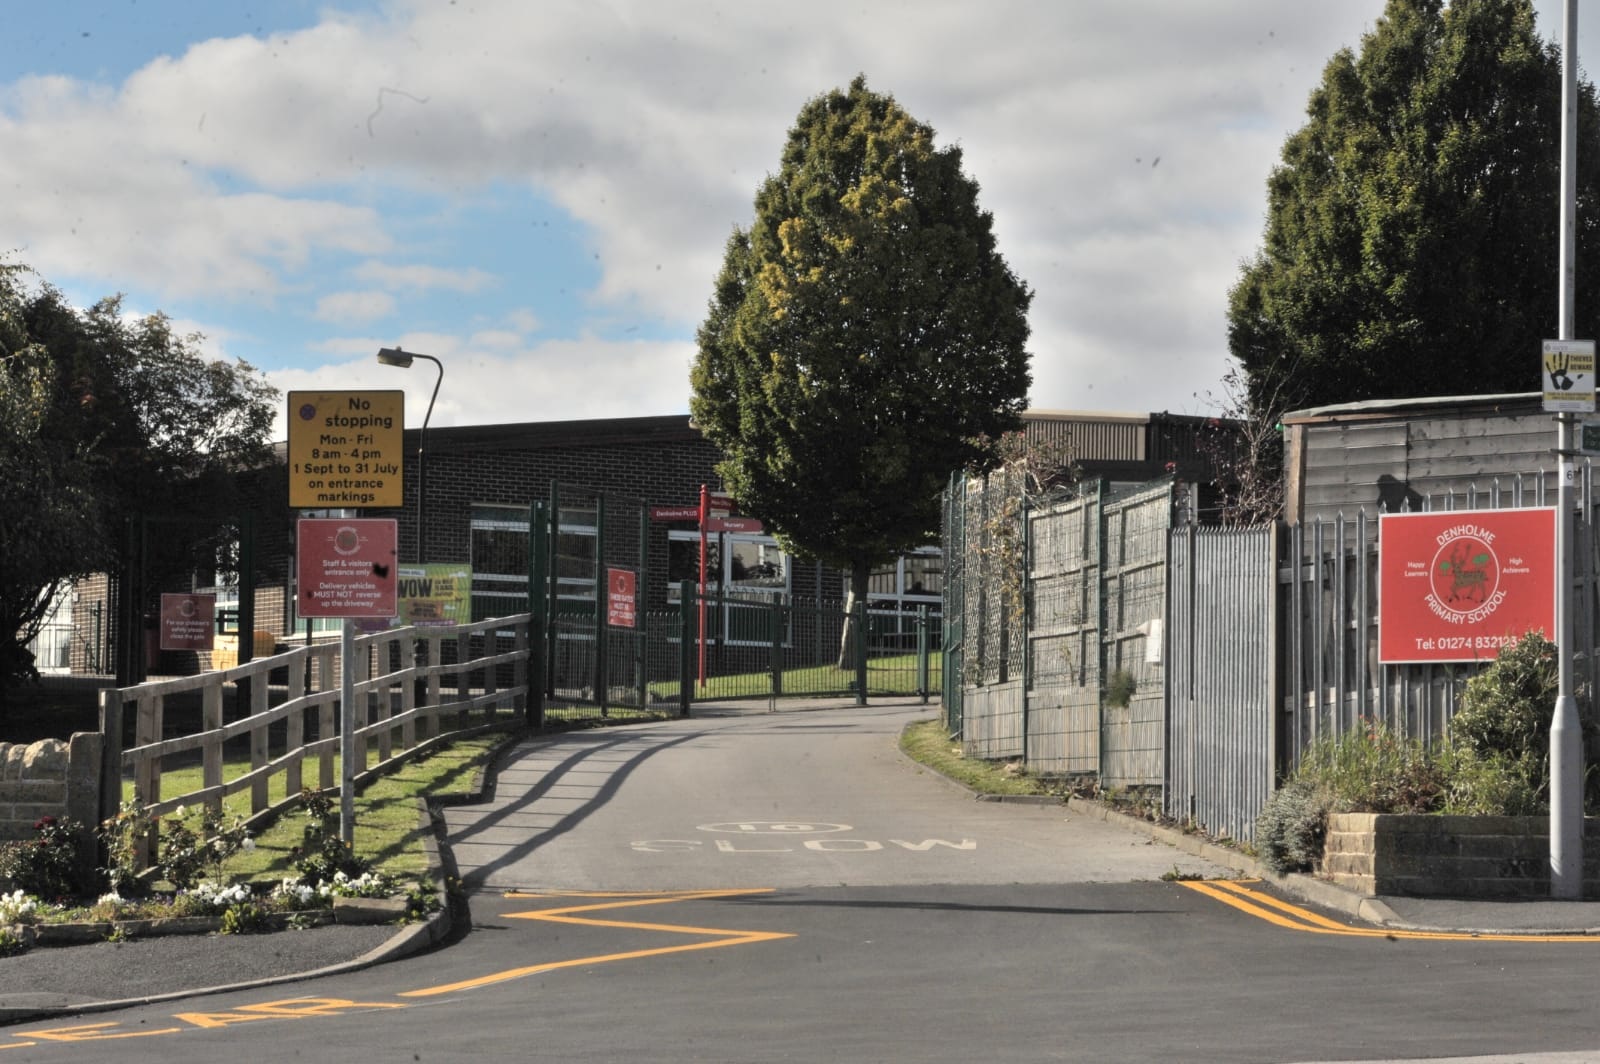 Denholme Primary forced to shut until next week for vomiting